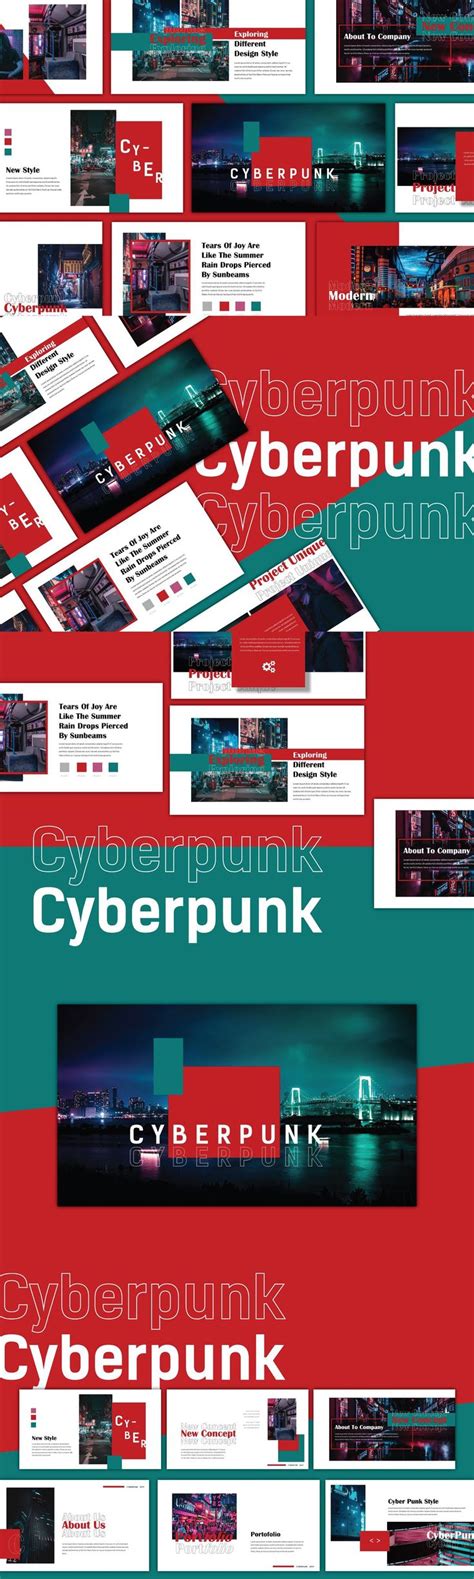 Cyberpunk Google Slide Template